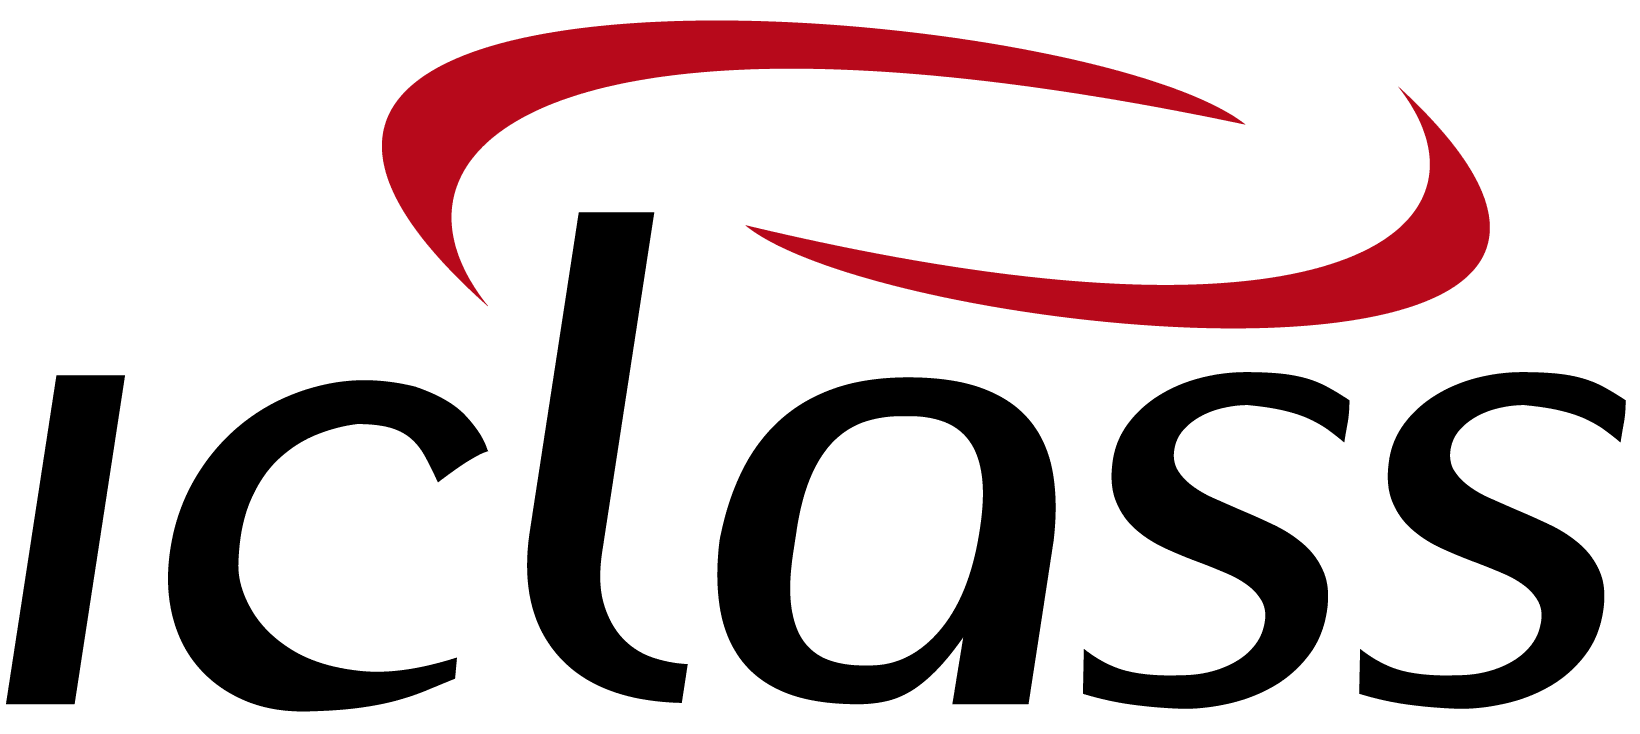 logo IClass Software de Ordem de Serviço Online Telecomunicaciones